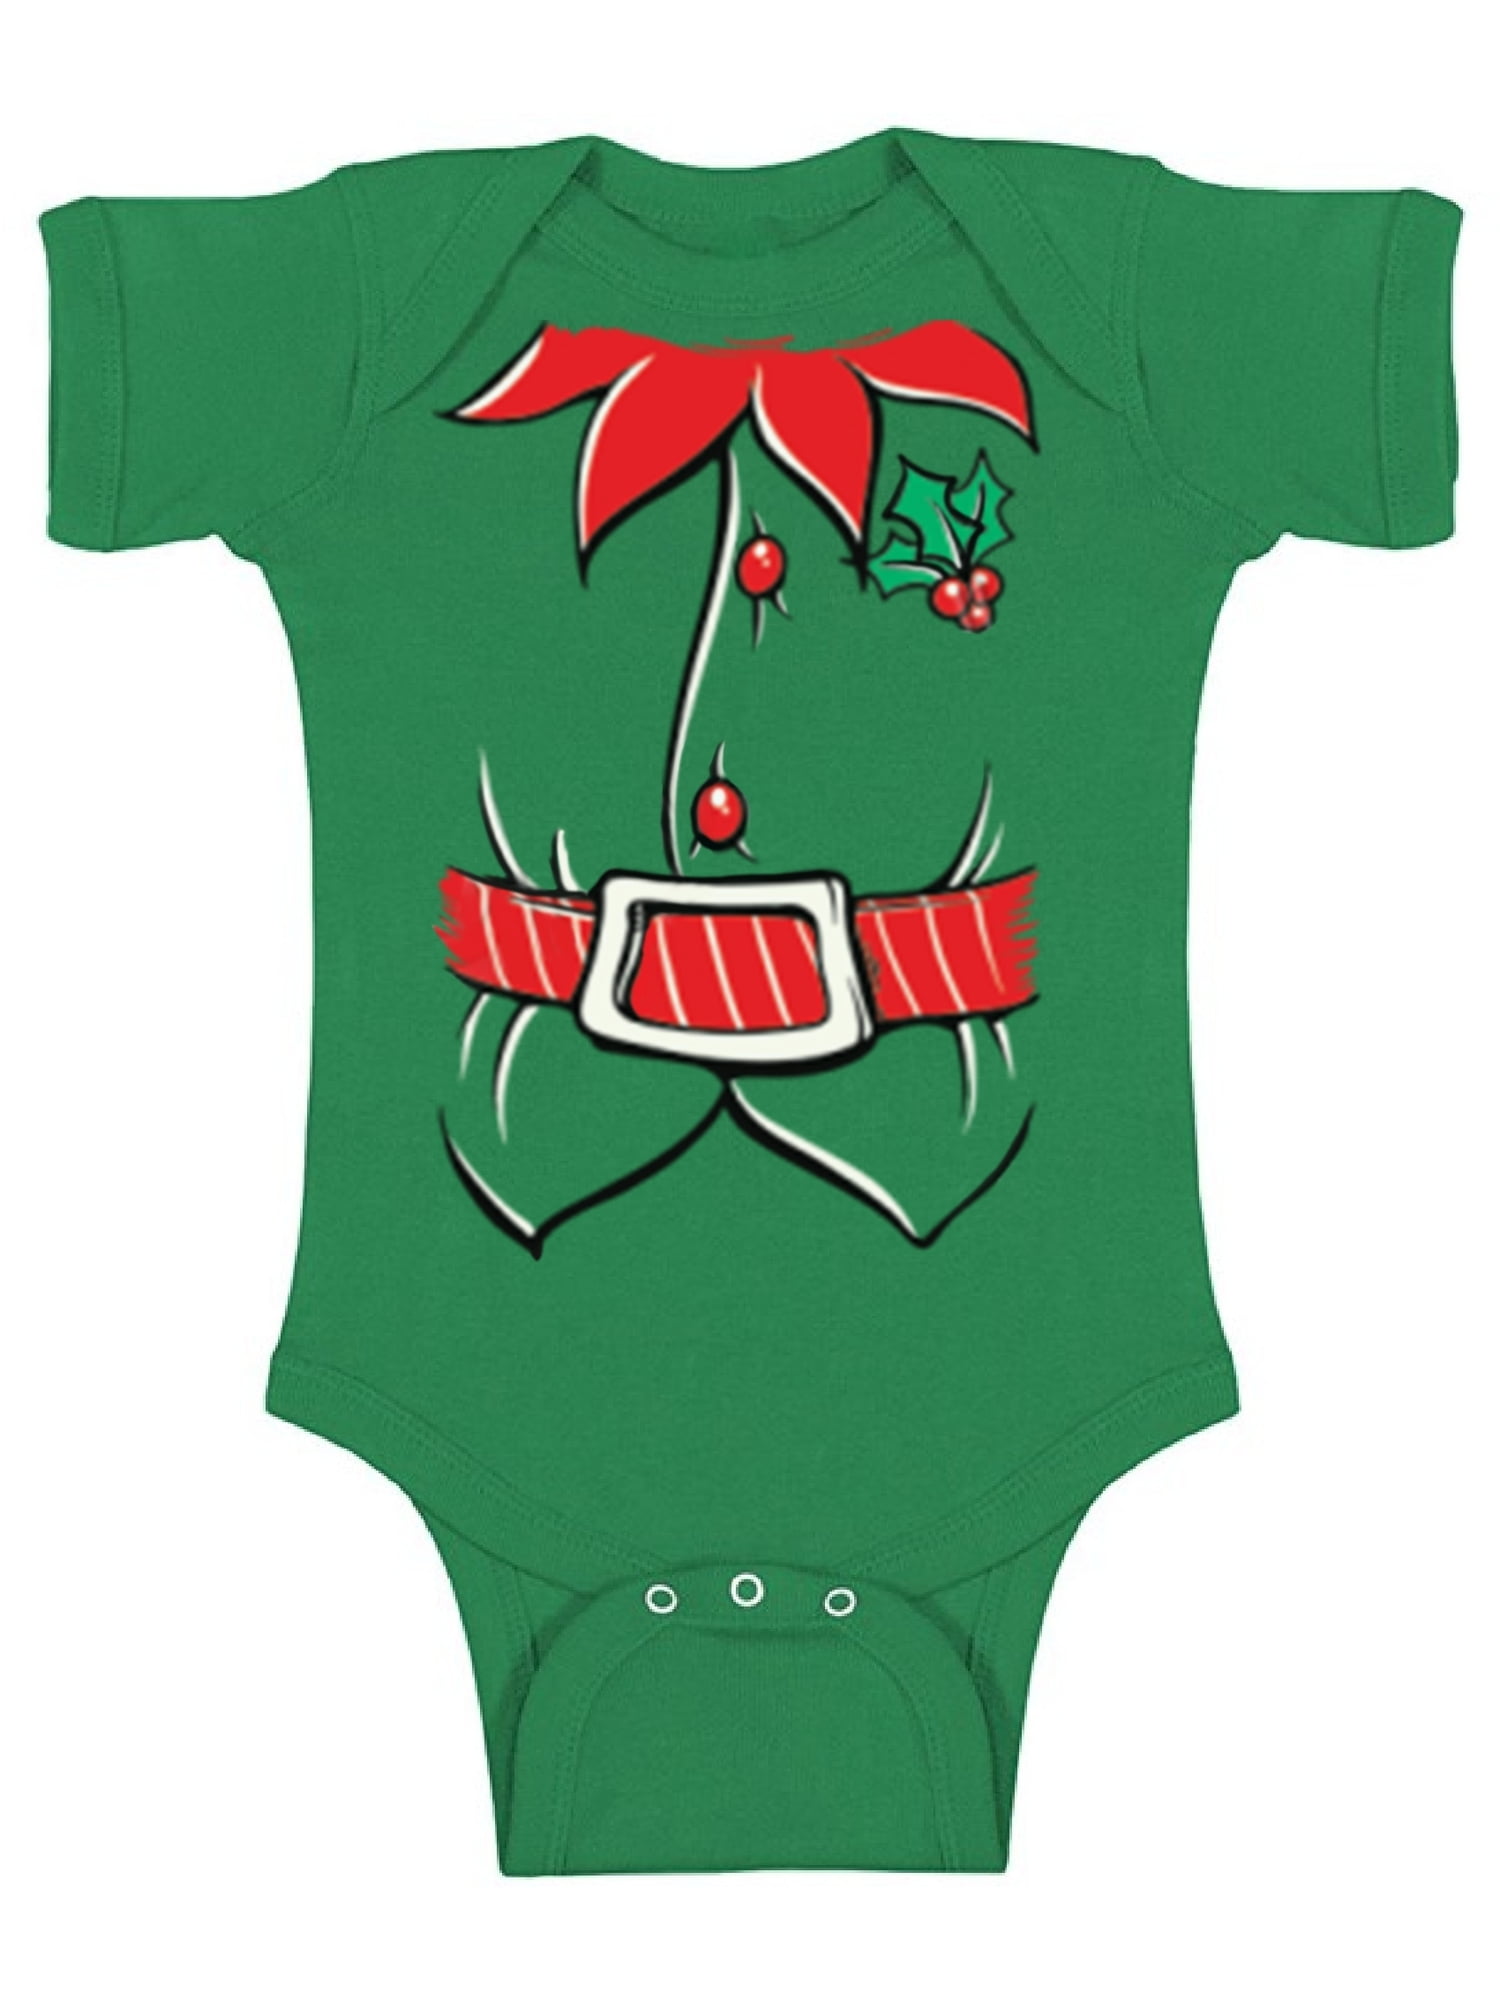 walmart christmas outfits for babies